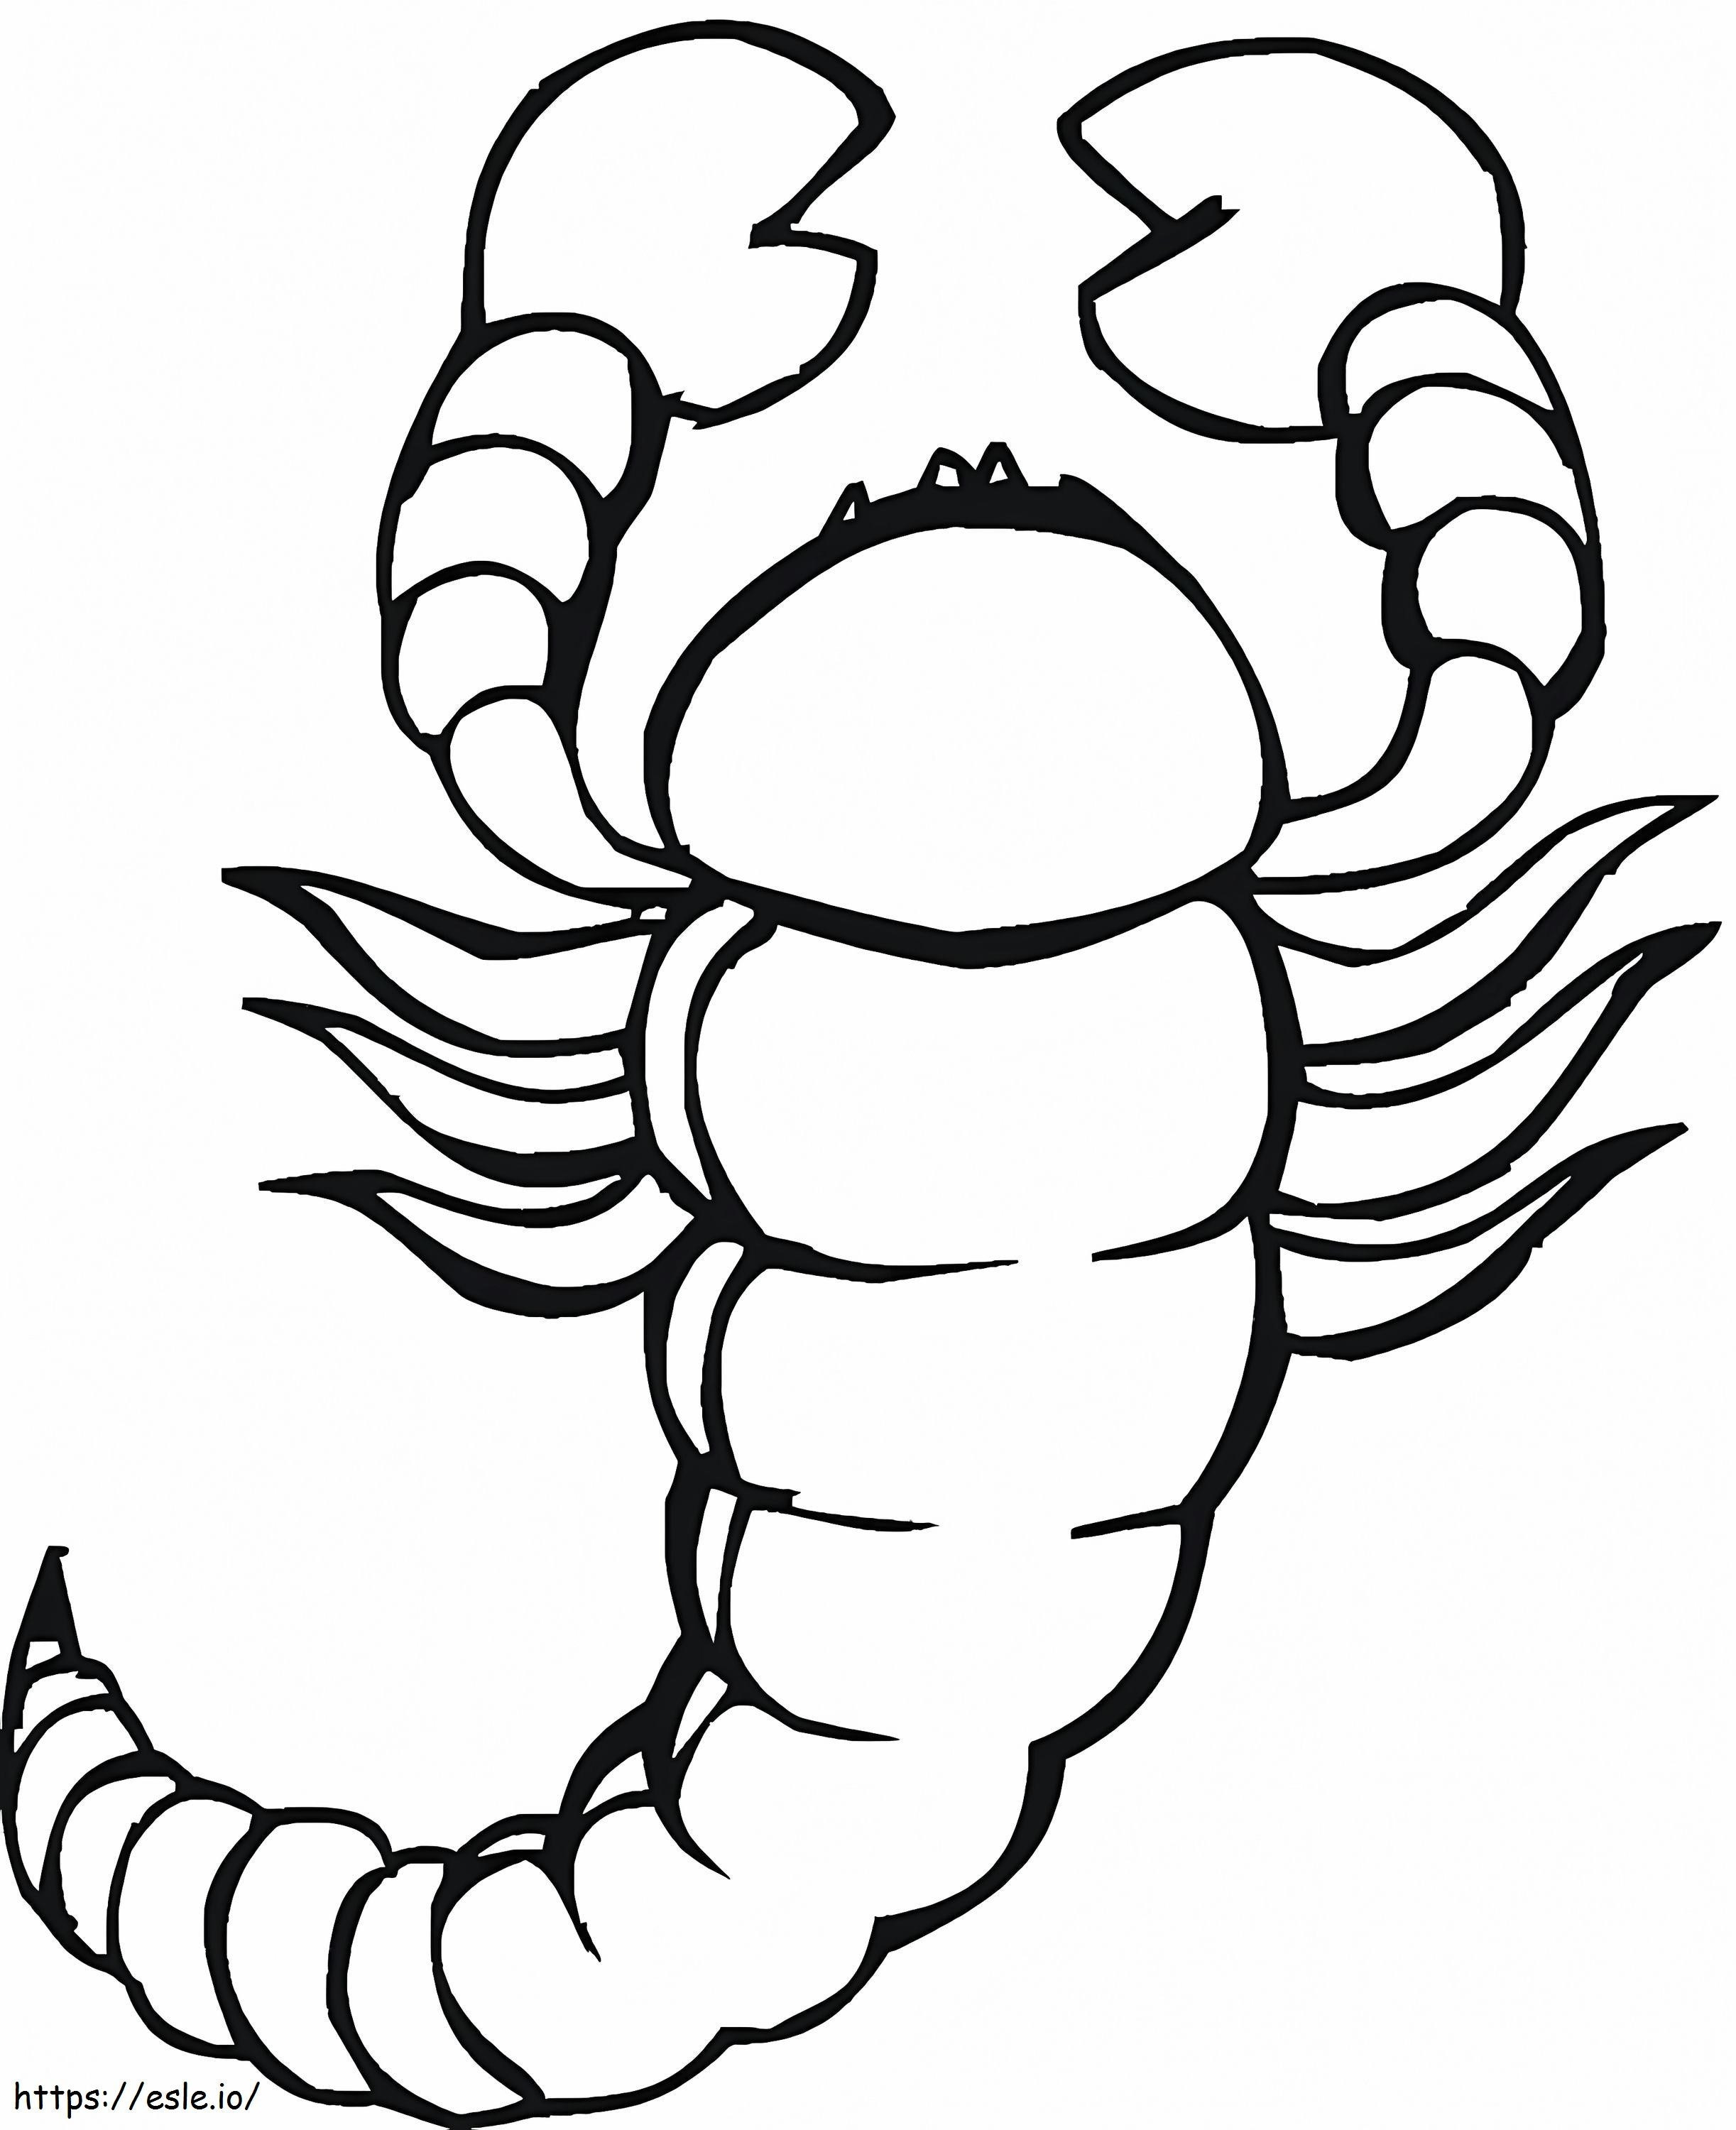 Coloriage Scorpions 3 à imprimer dessin